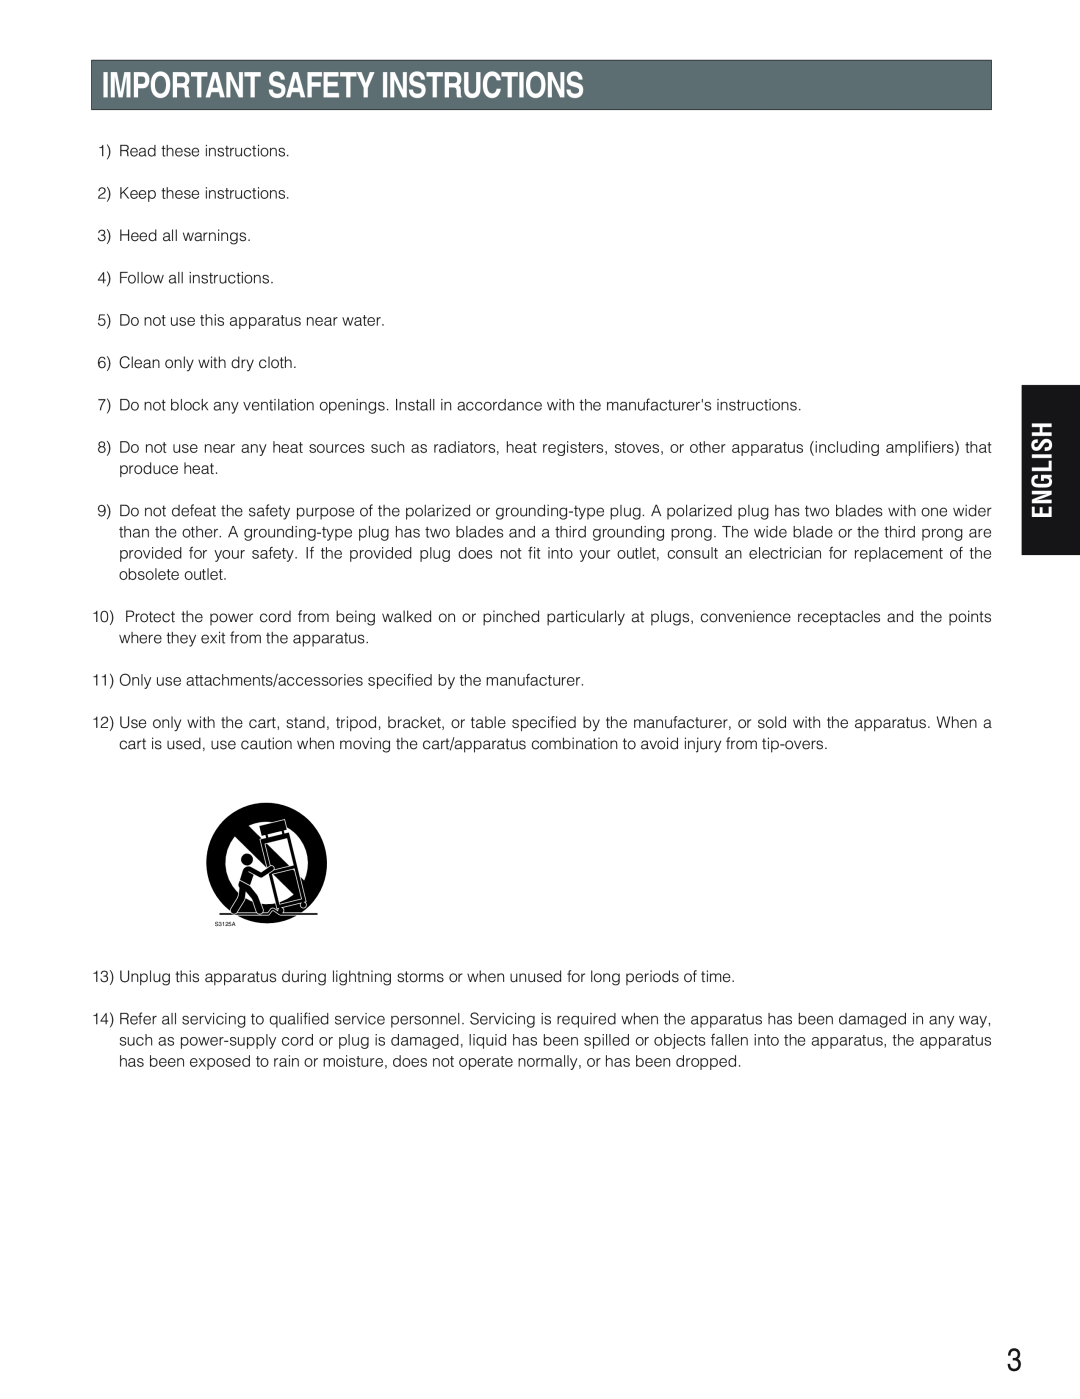 Panasonic WX-CC2010 operating instructions Important Safety Instructions, English 